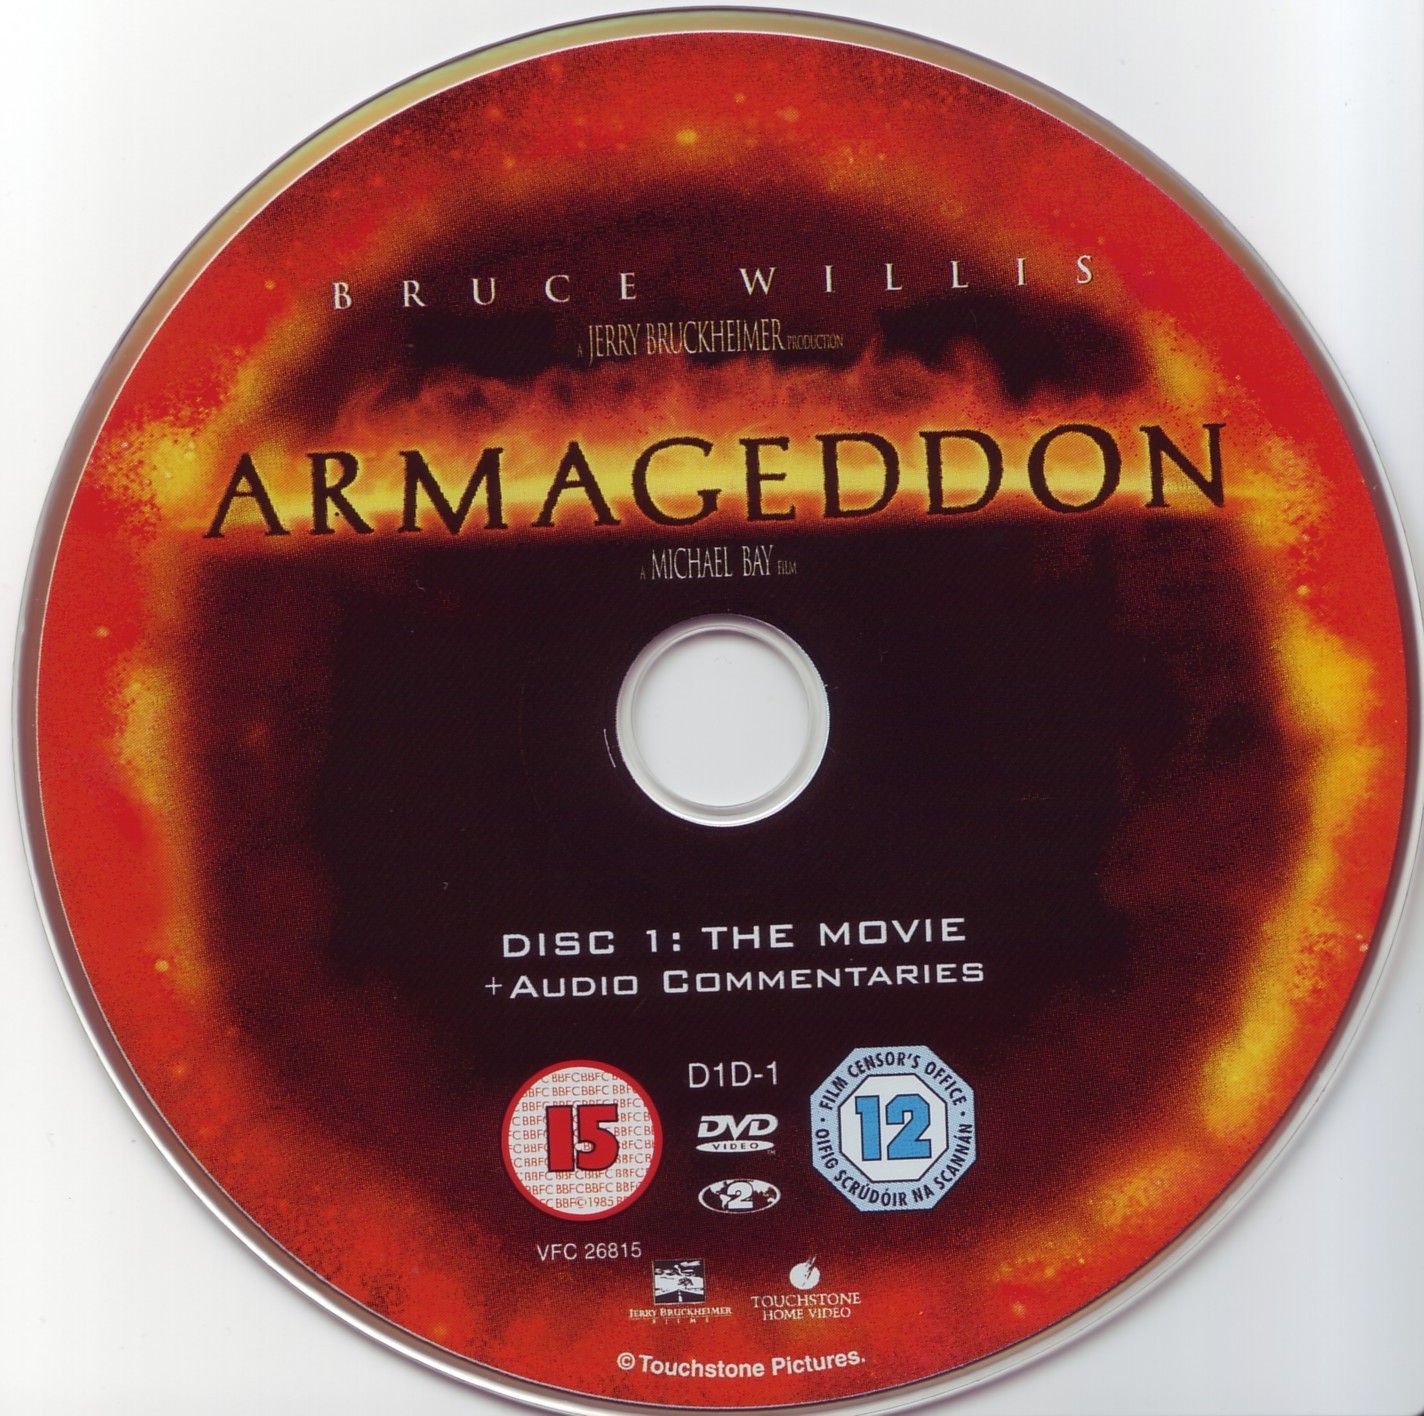 Армагеддон песня аэросмит. Армагеддон 1998 DVD Cover. Armageddon 1998 DVD Cover. OST Армагеддон. Треки к фильму Армагеддон.